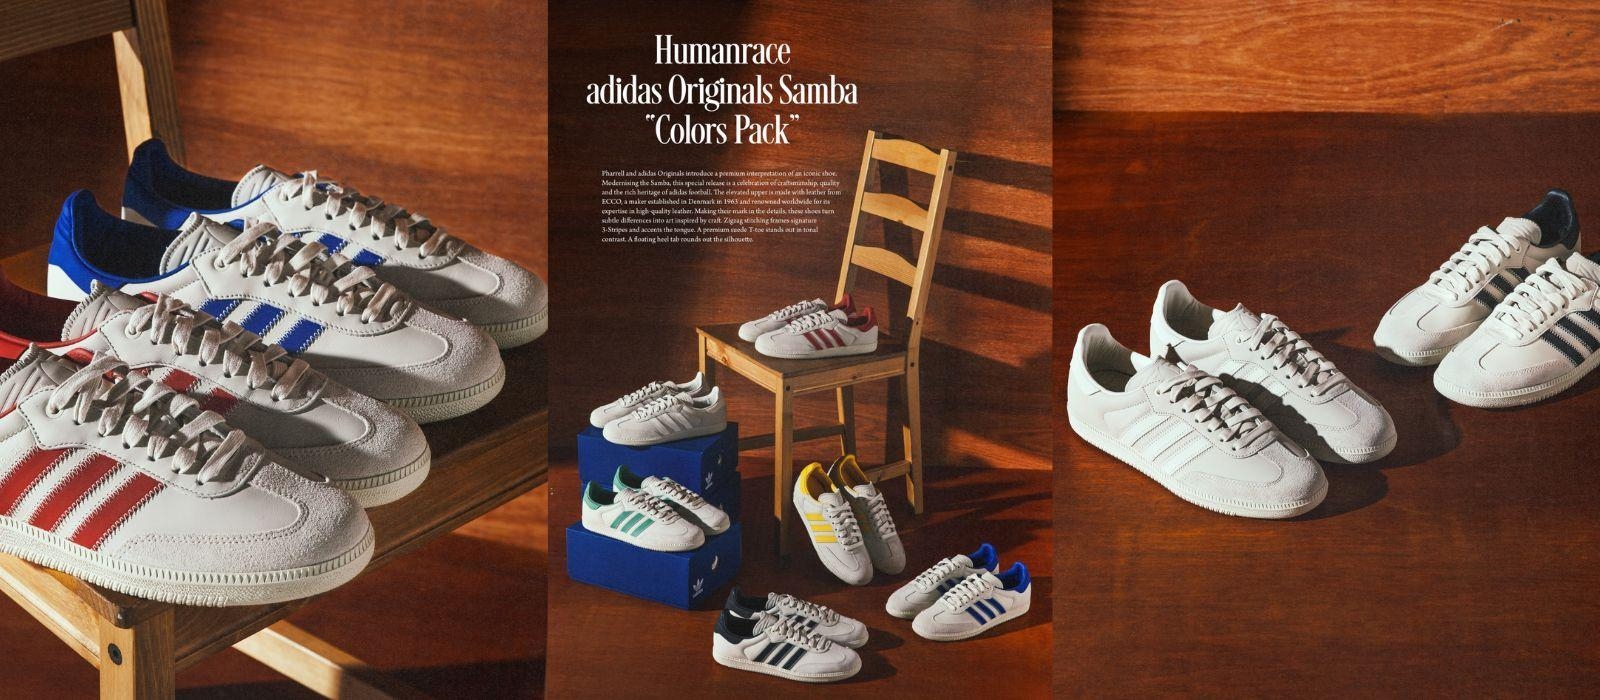 adidas Originals x Pharrell Williams Humanrace Samba “Colors Pack” (7,200 THB) l Online Raffle Via. Carnival Application